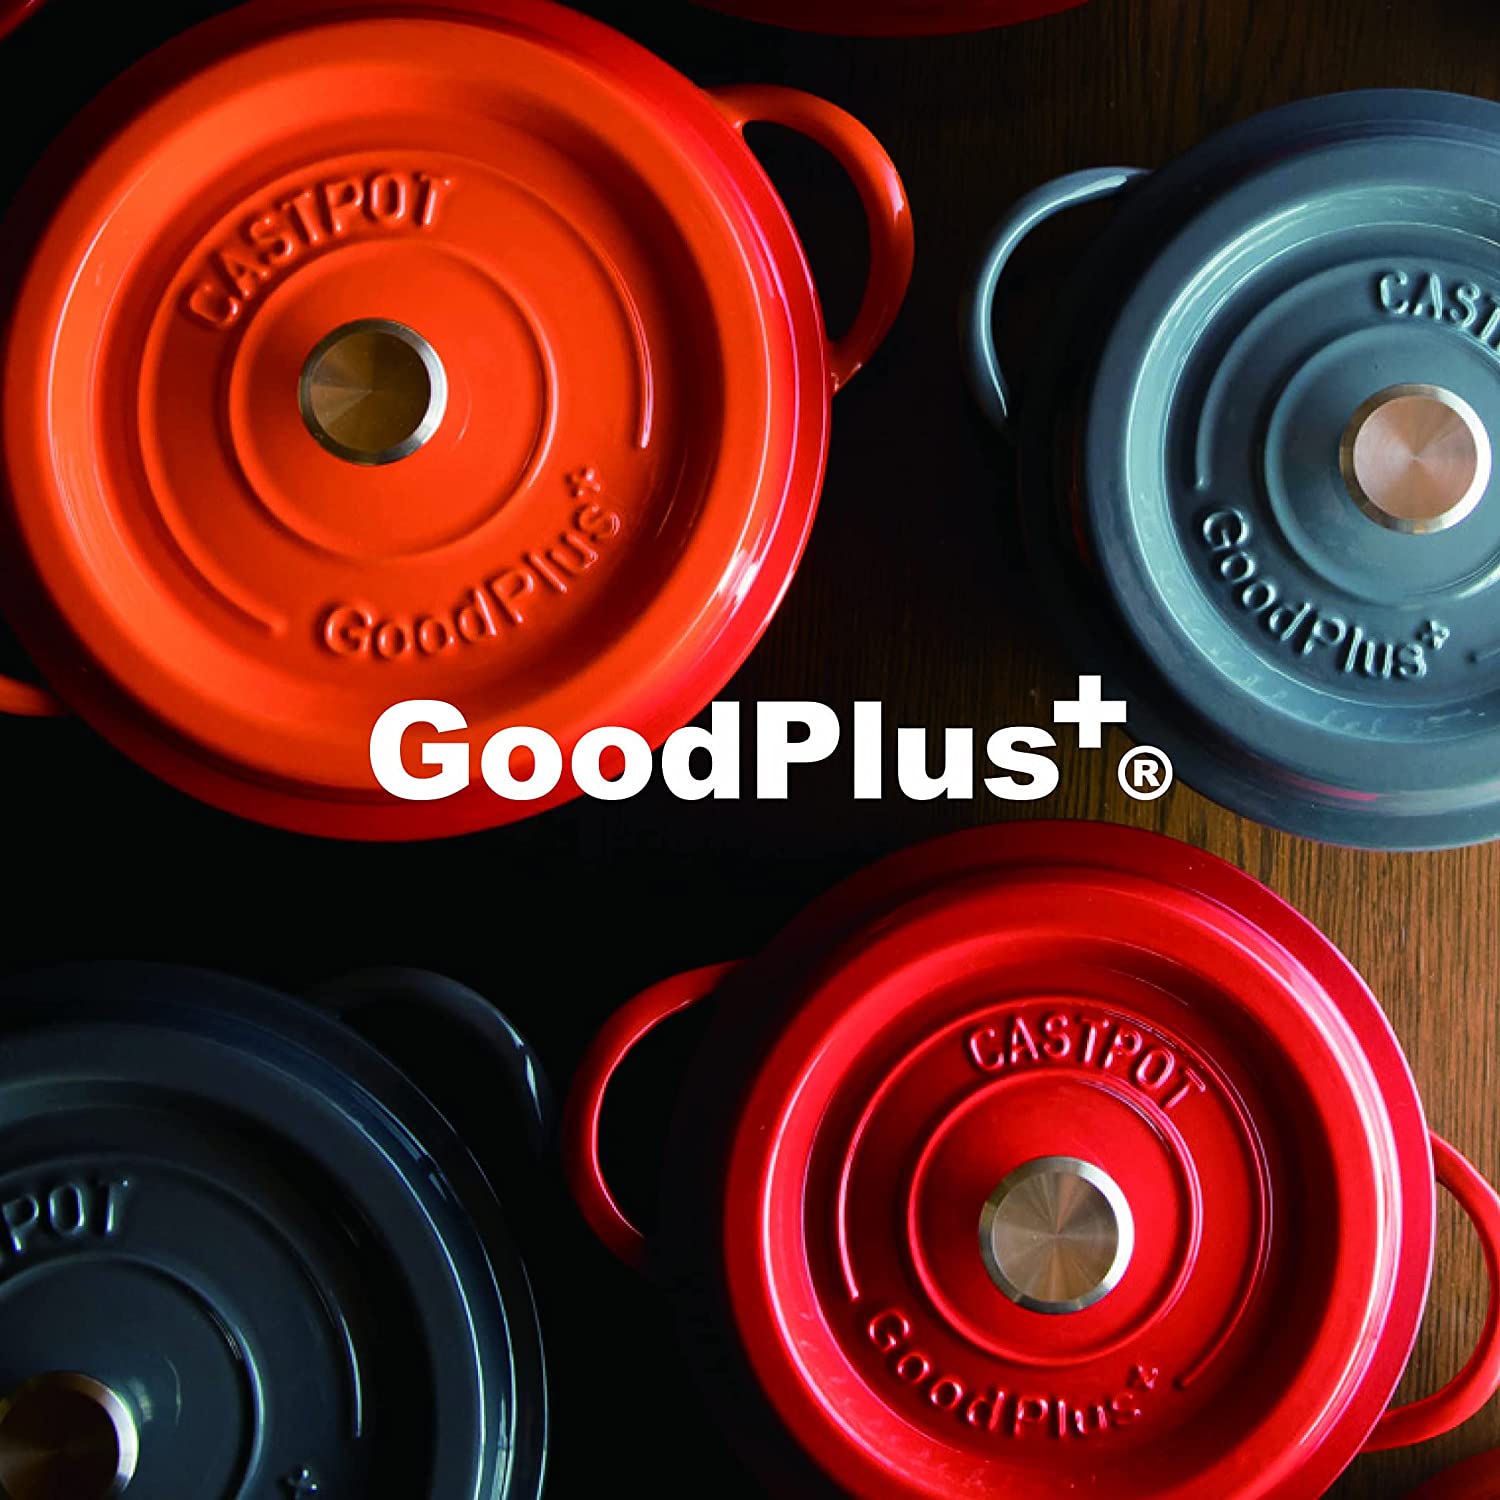 GoodPlus+(グッドプラス) ホーロー保存容器<エマイル>の商品画像サムネ6 